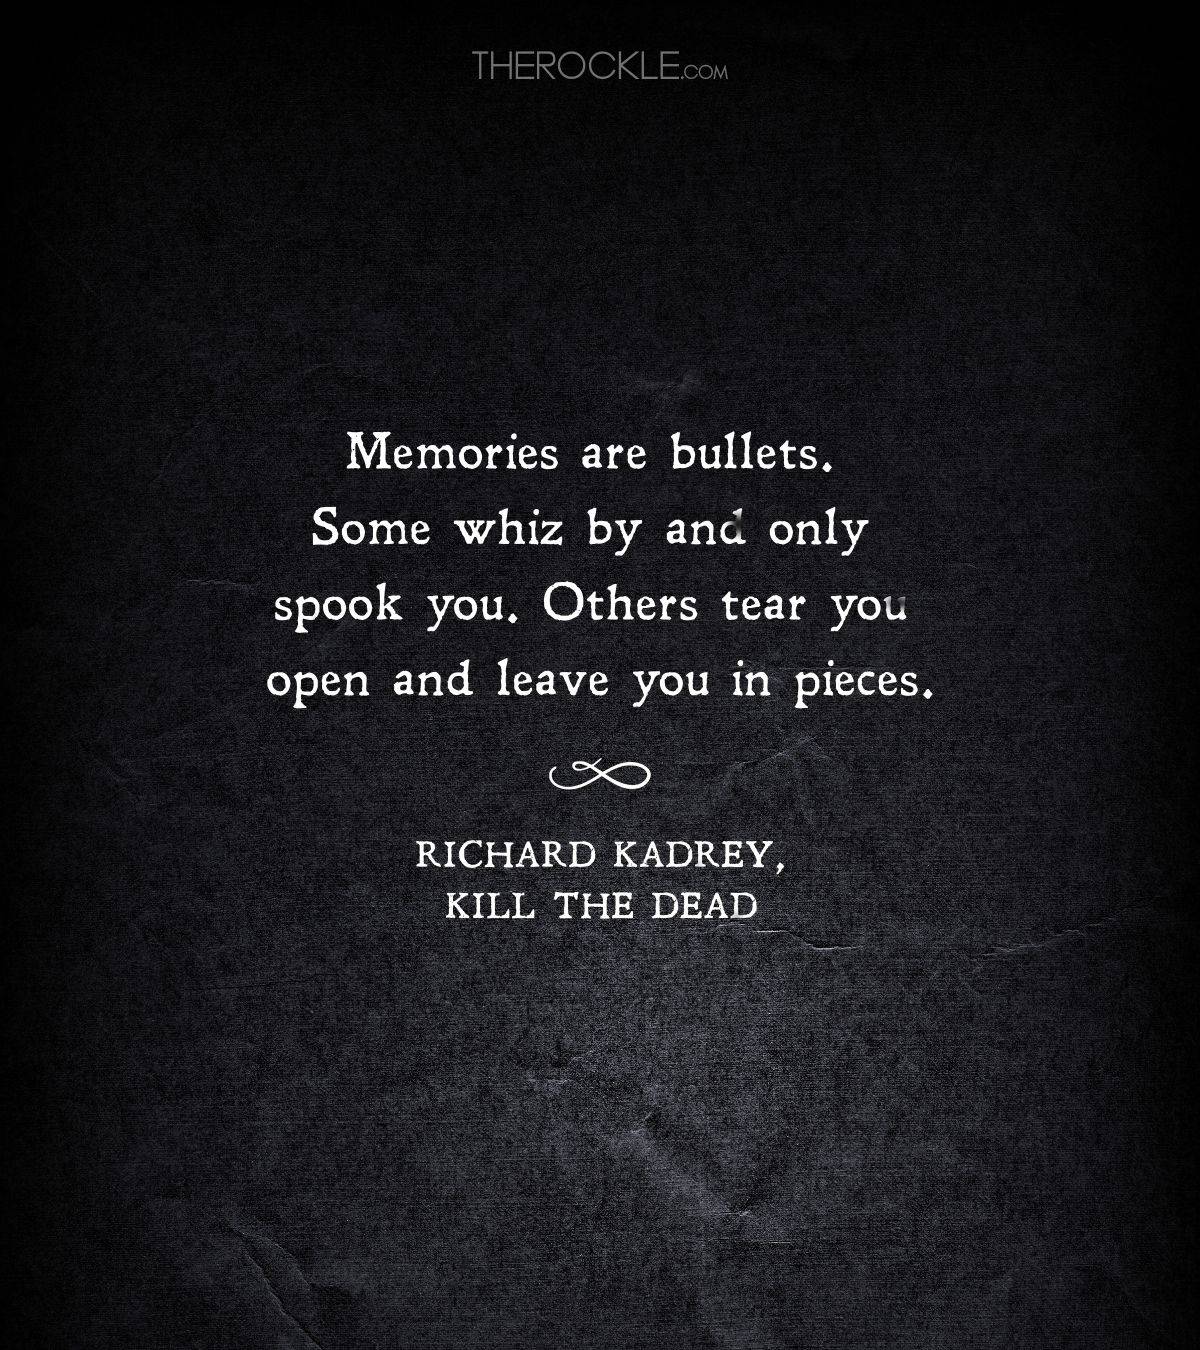 Richard Kadrey quote